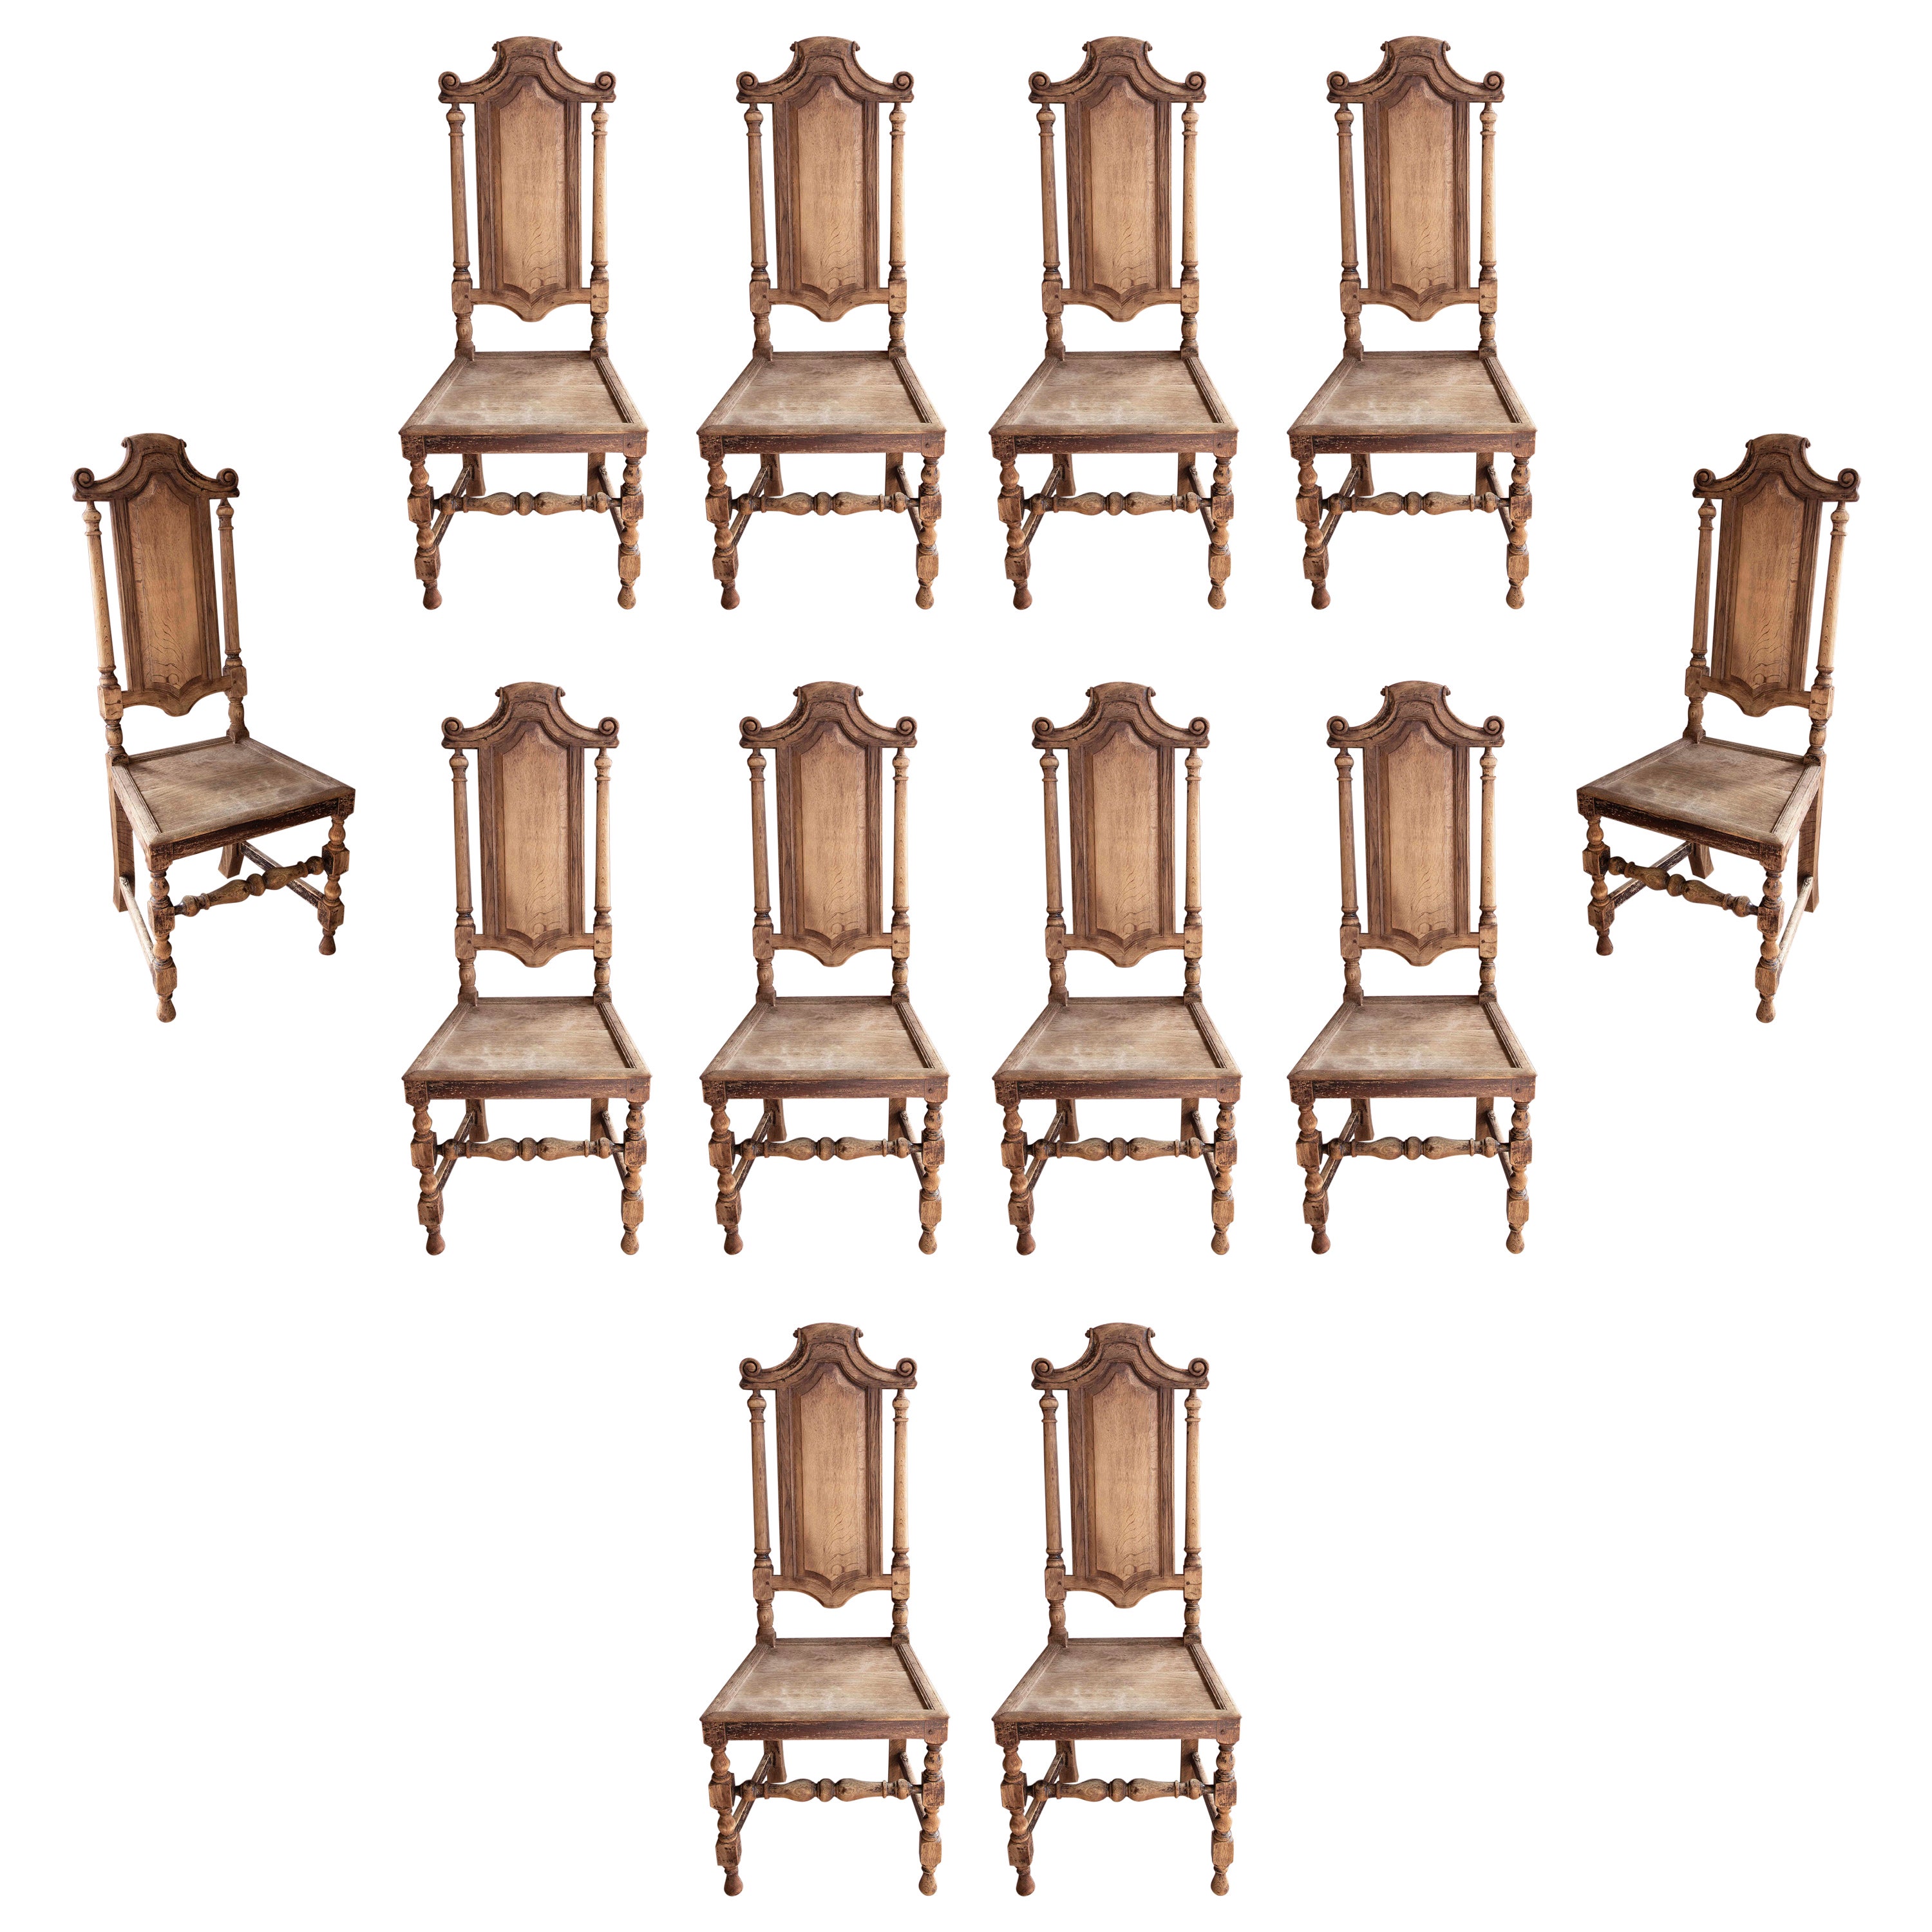 Set of Twelve Elegant Wooden Dining Room Chairs with Backrest For Sale